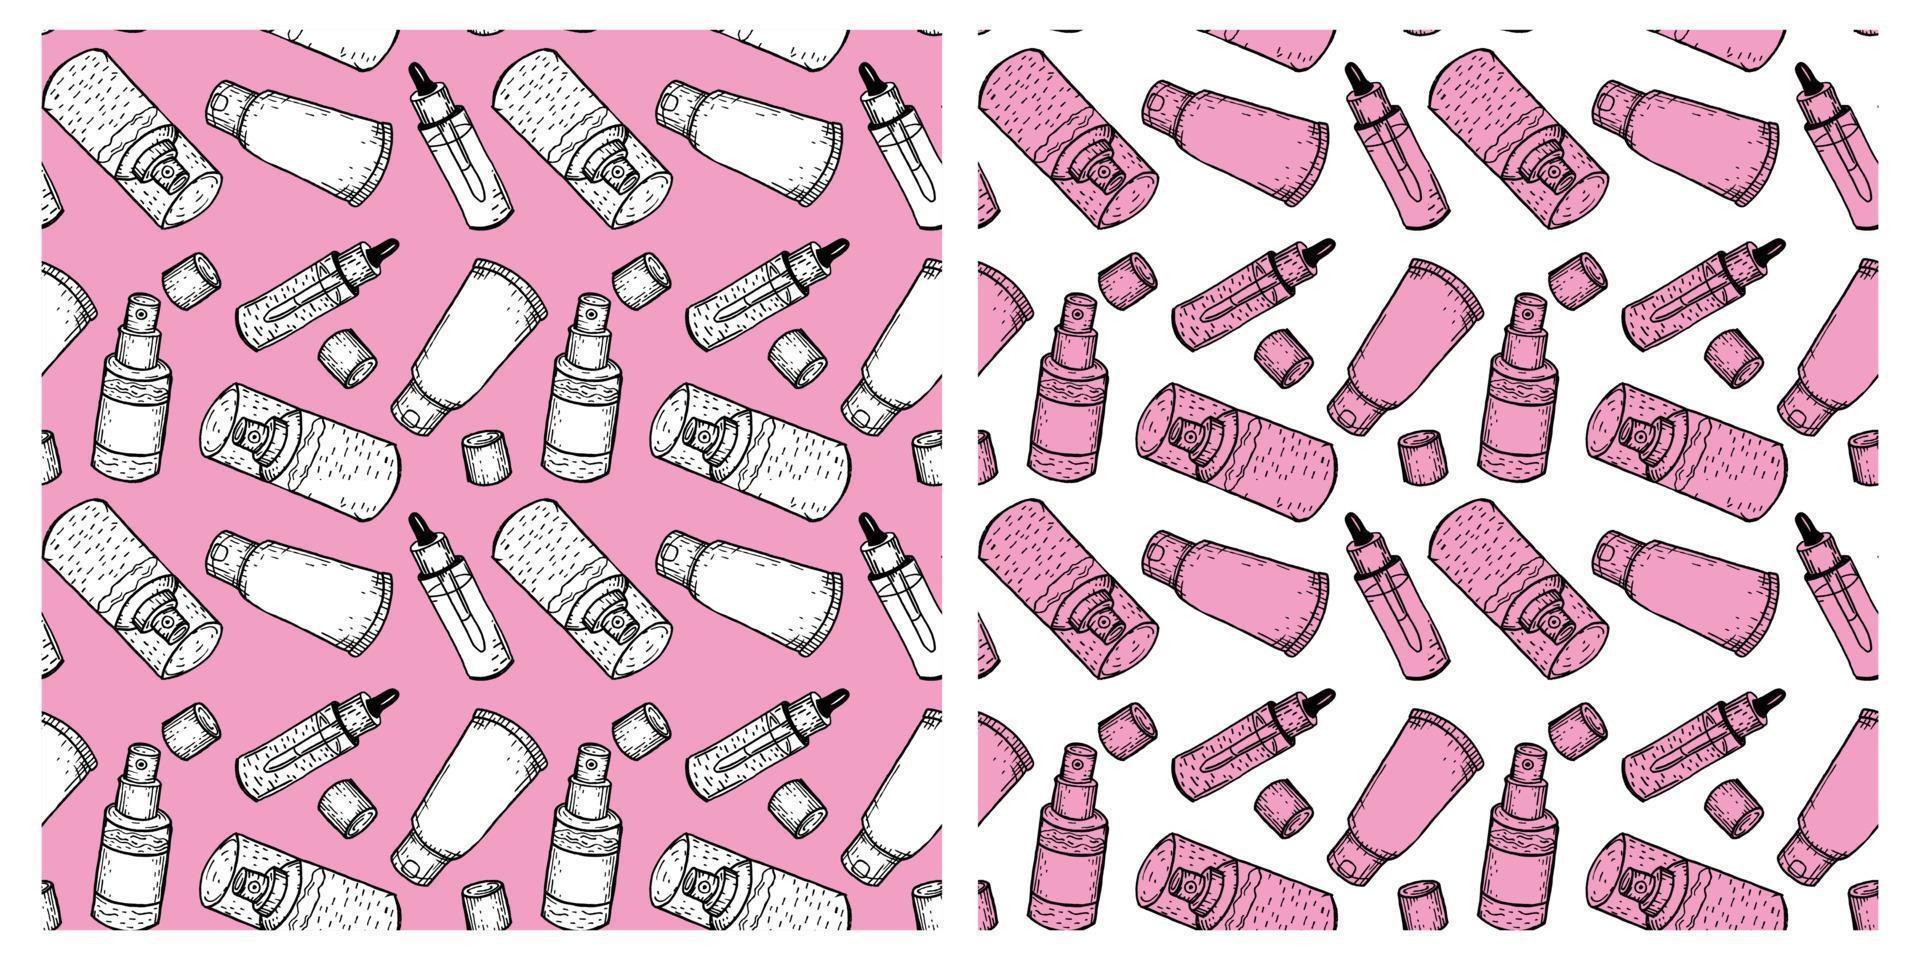 A set of seamless pink and white patterns. Beauty cosmetics, bottles, cream, makeup. Women's stuff vector